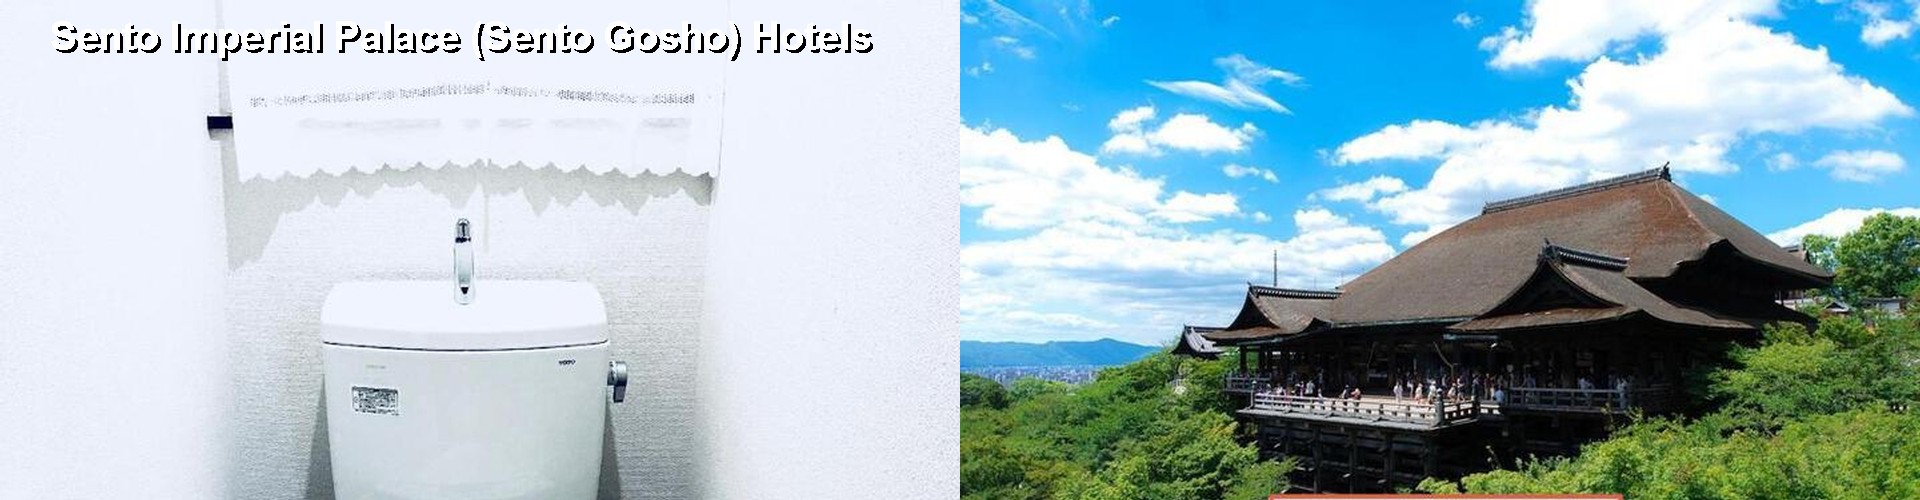 5 Best Hotels near Sento Imperial Palace (Sento Gosho)